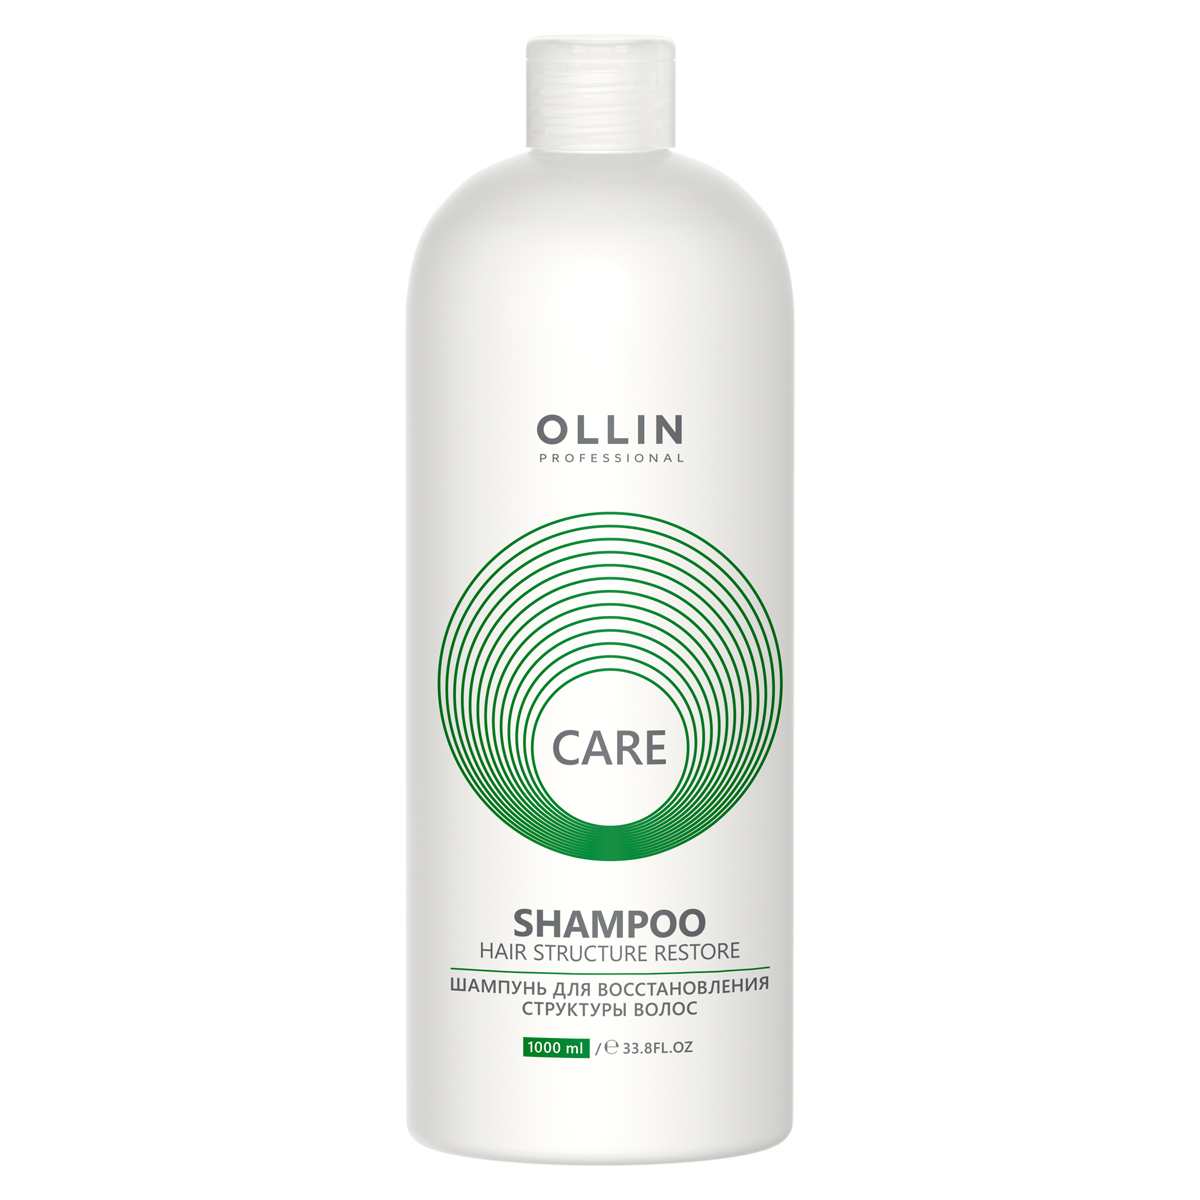 Ollin Professional Шампунь для восстановления структуры волос, 1000 мл (Ollin Professional, Care)